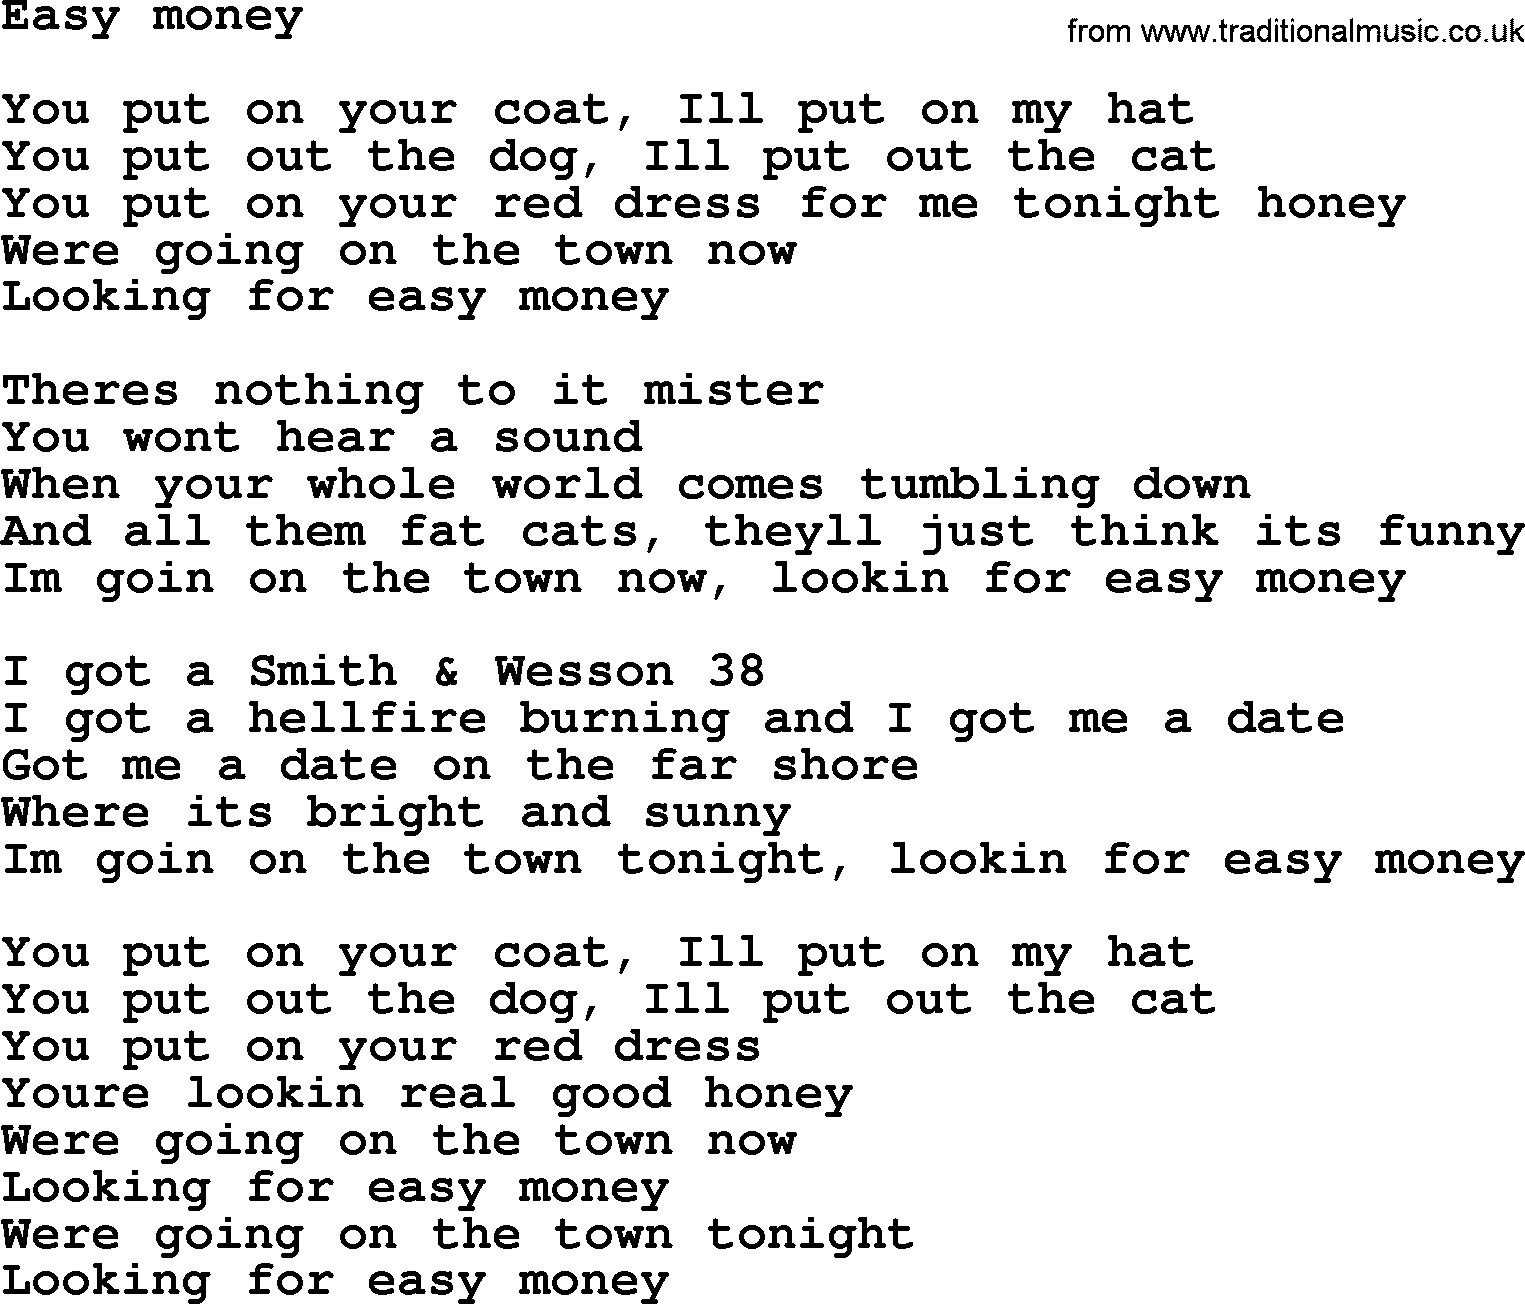 Bruce Springsteen song: Easy Money lyrics